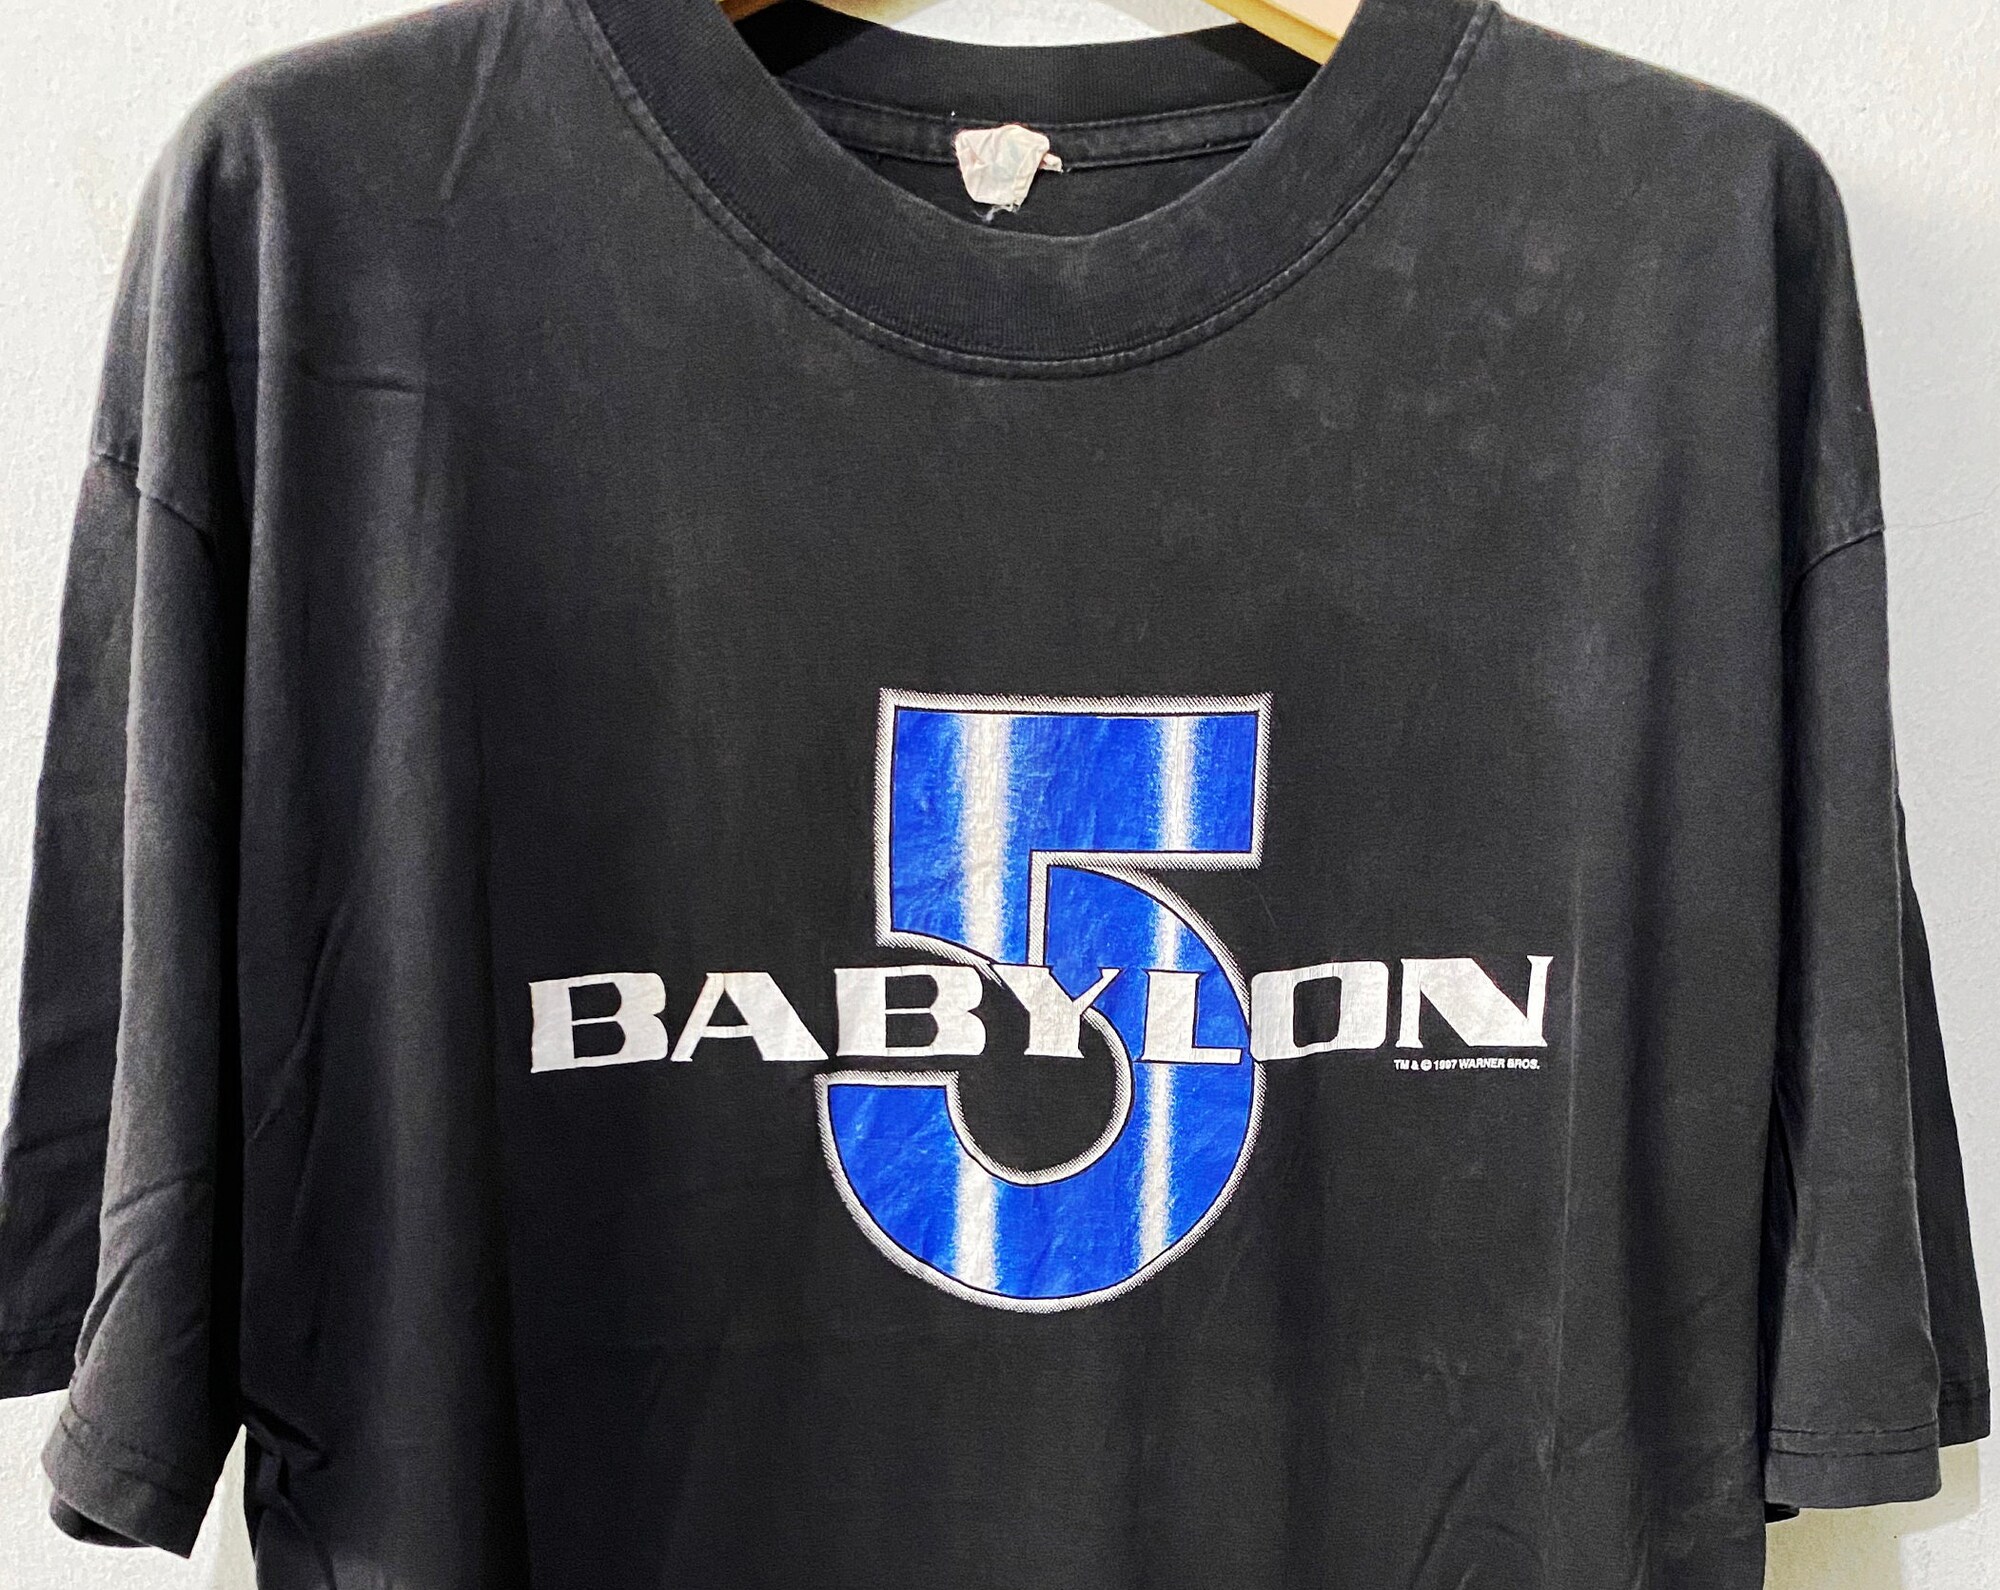 Vintage 1997 Babylon 5 Shirt